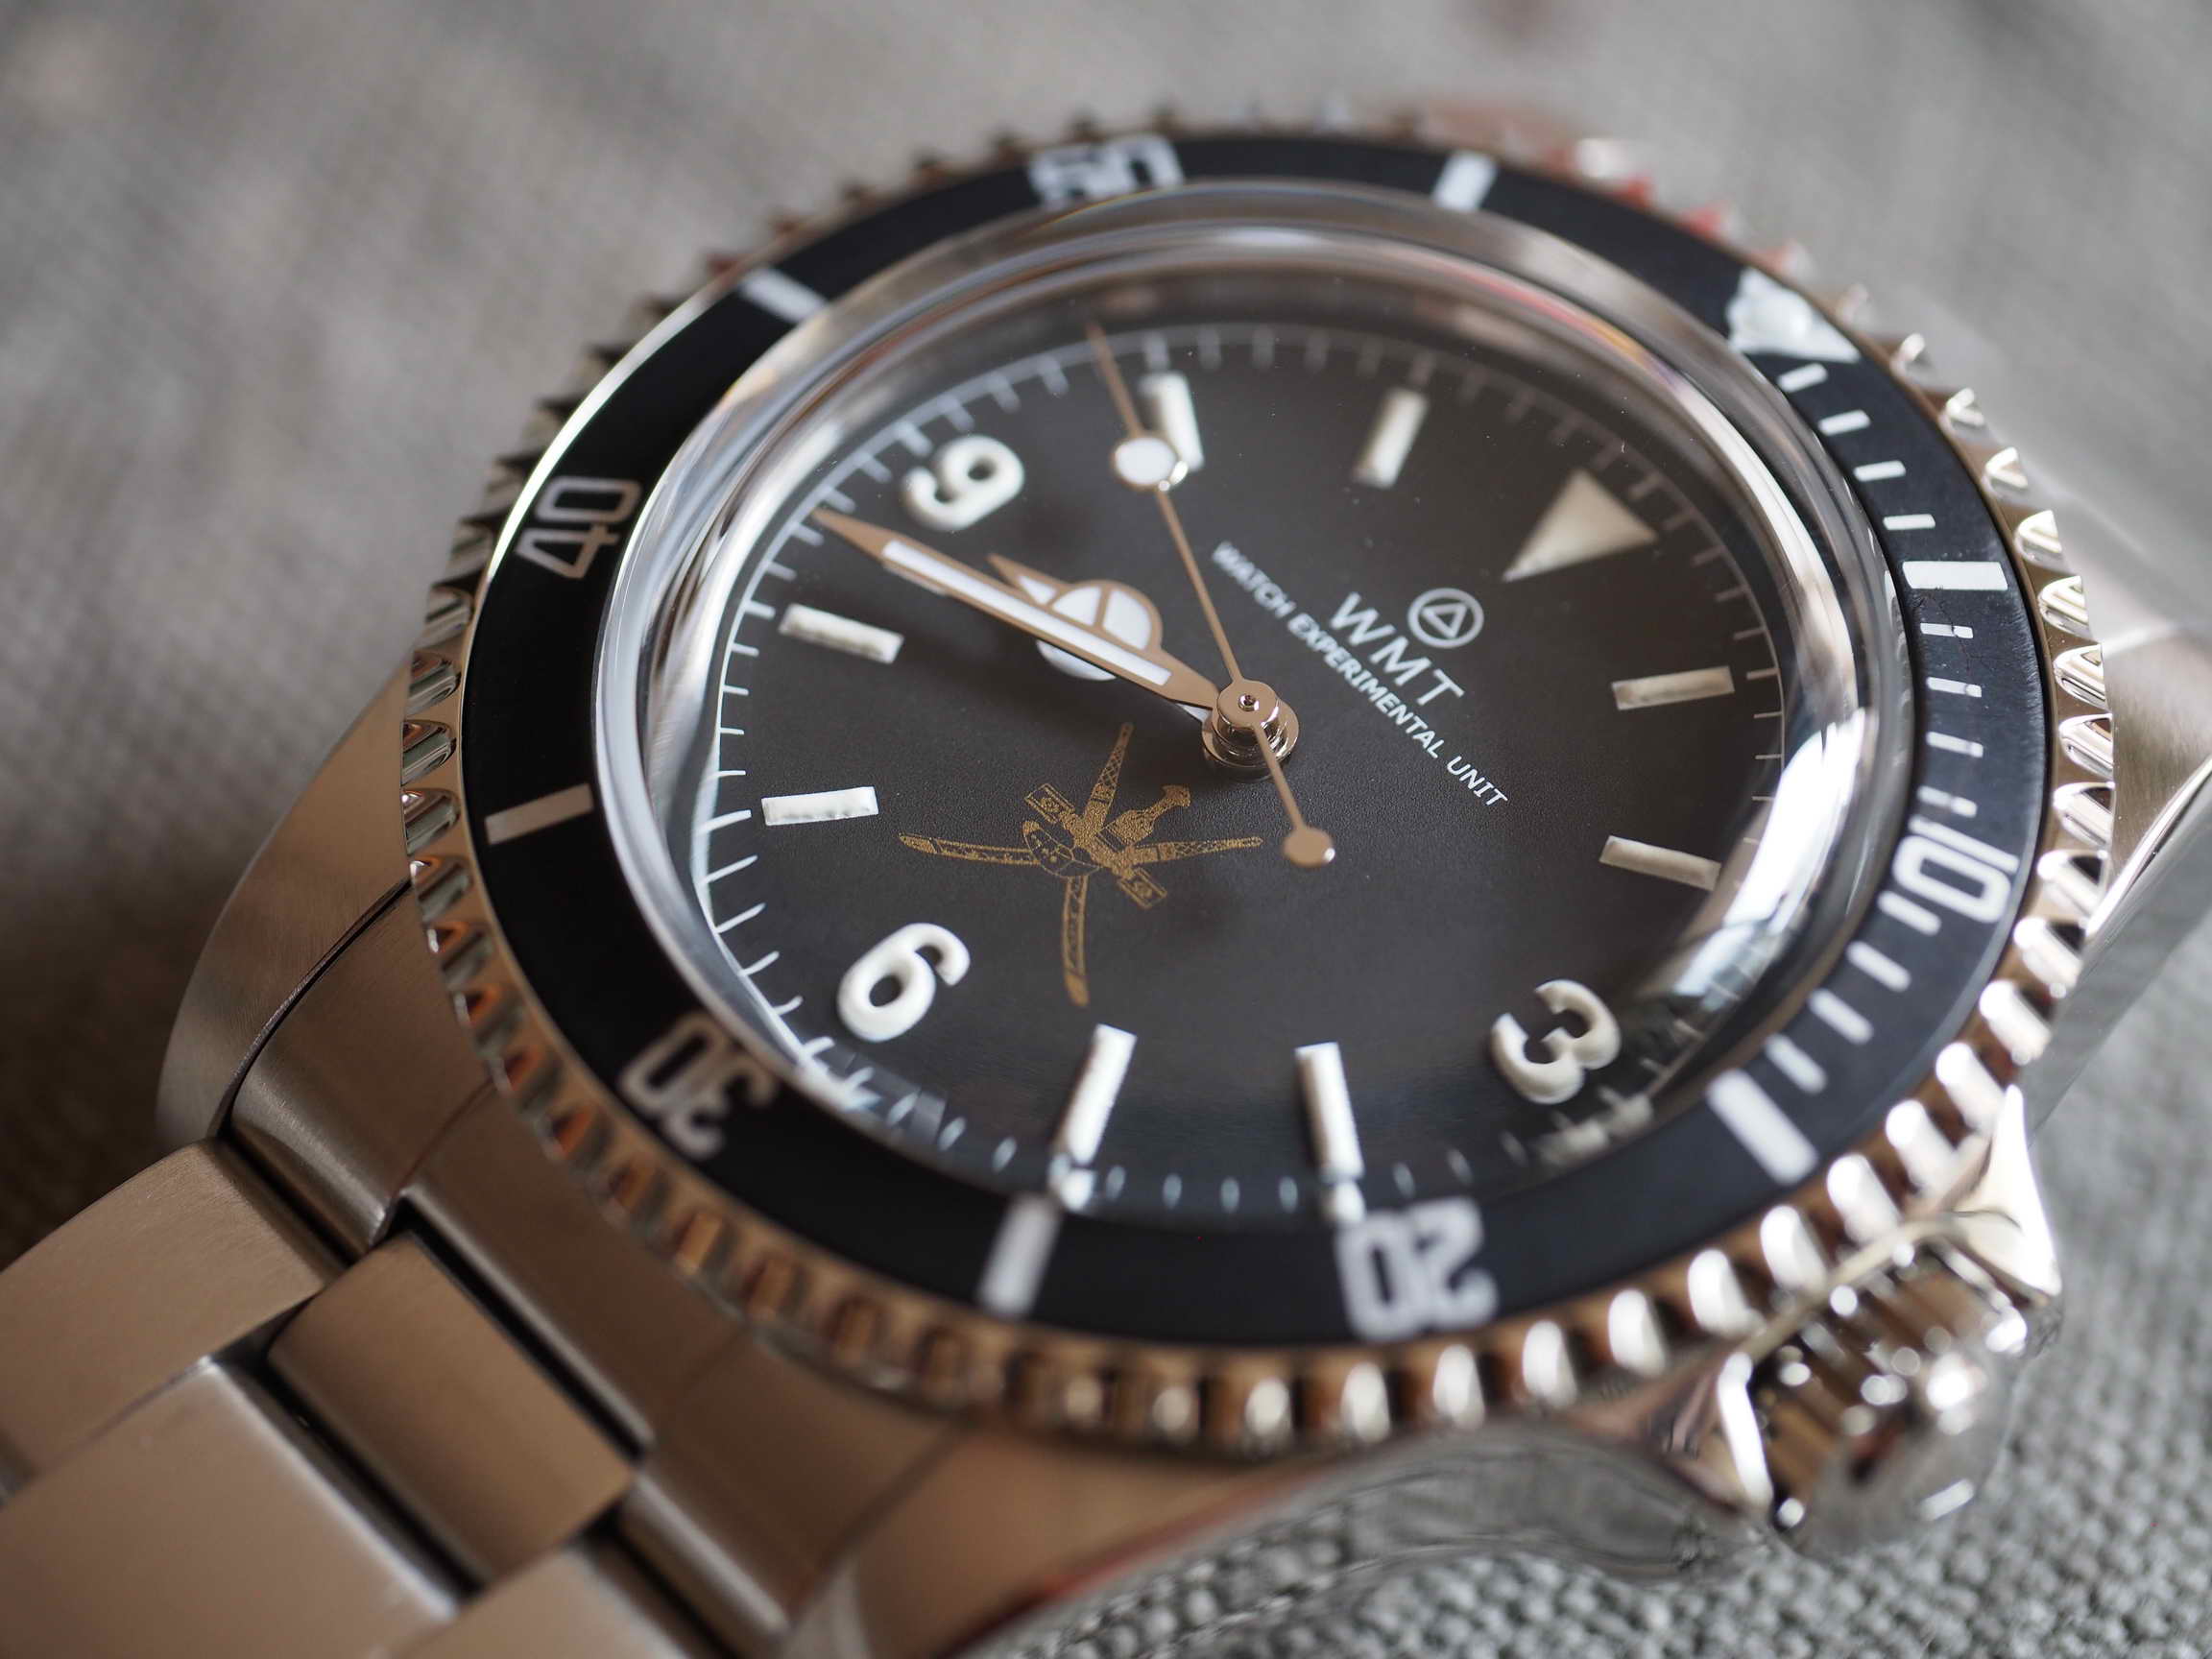 WMT Royal Marine OMAN オマーン 時計 - 腕時計(アナログ)